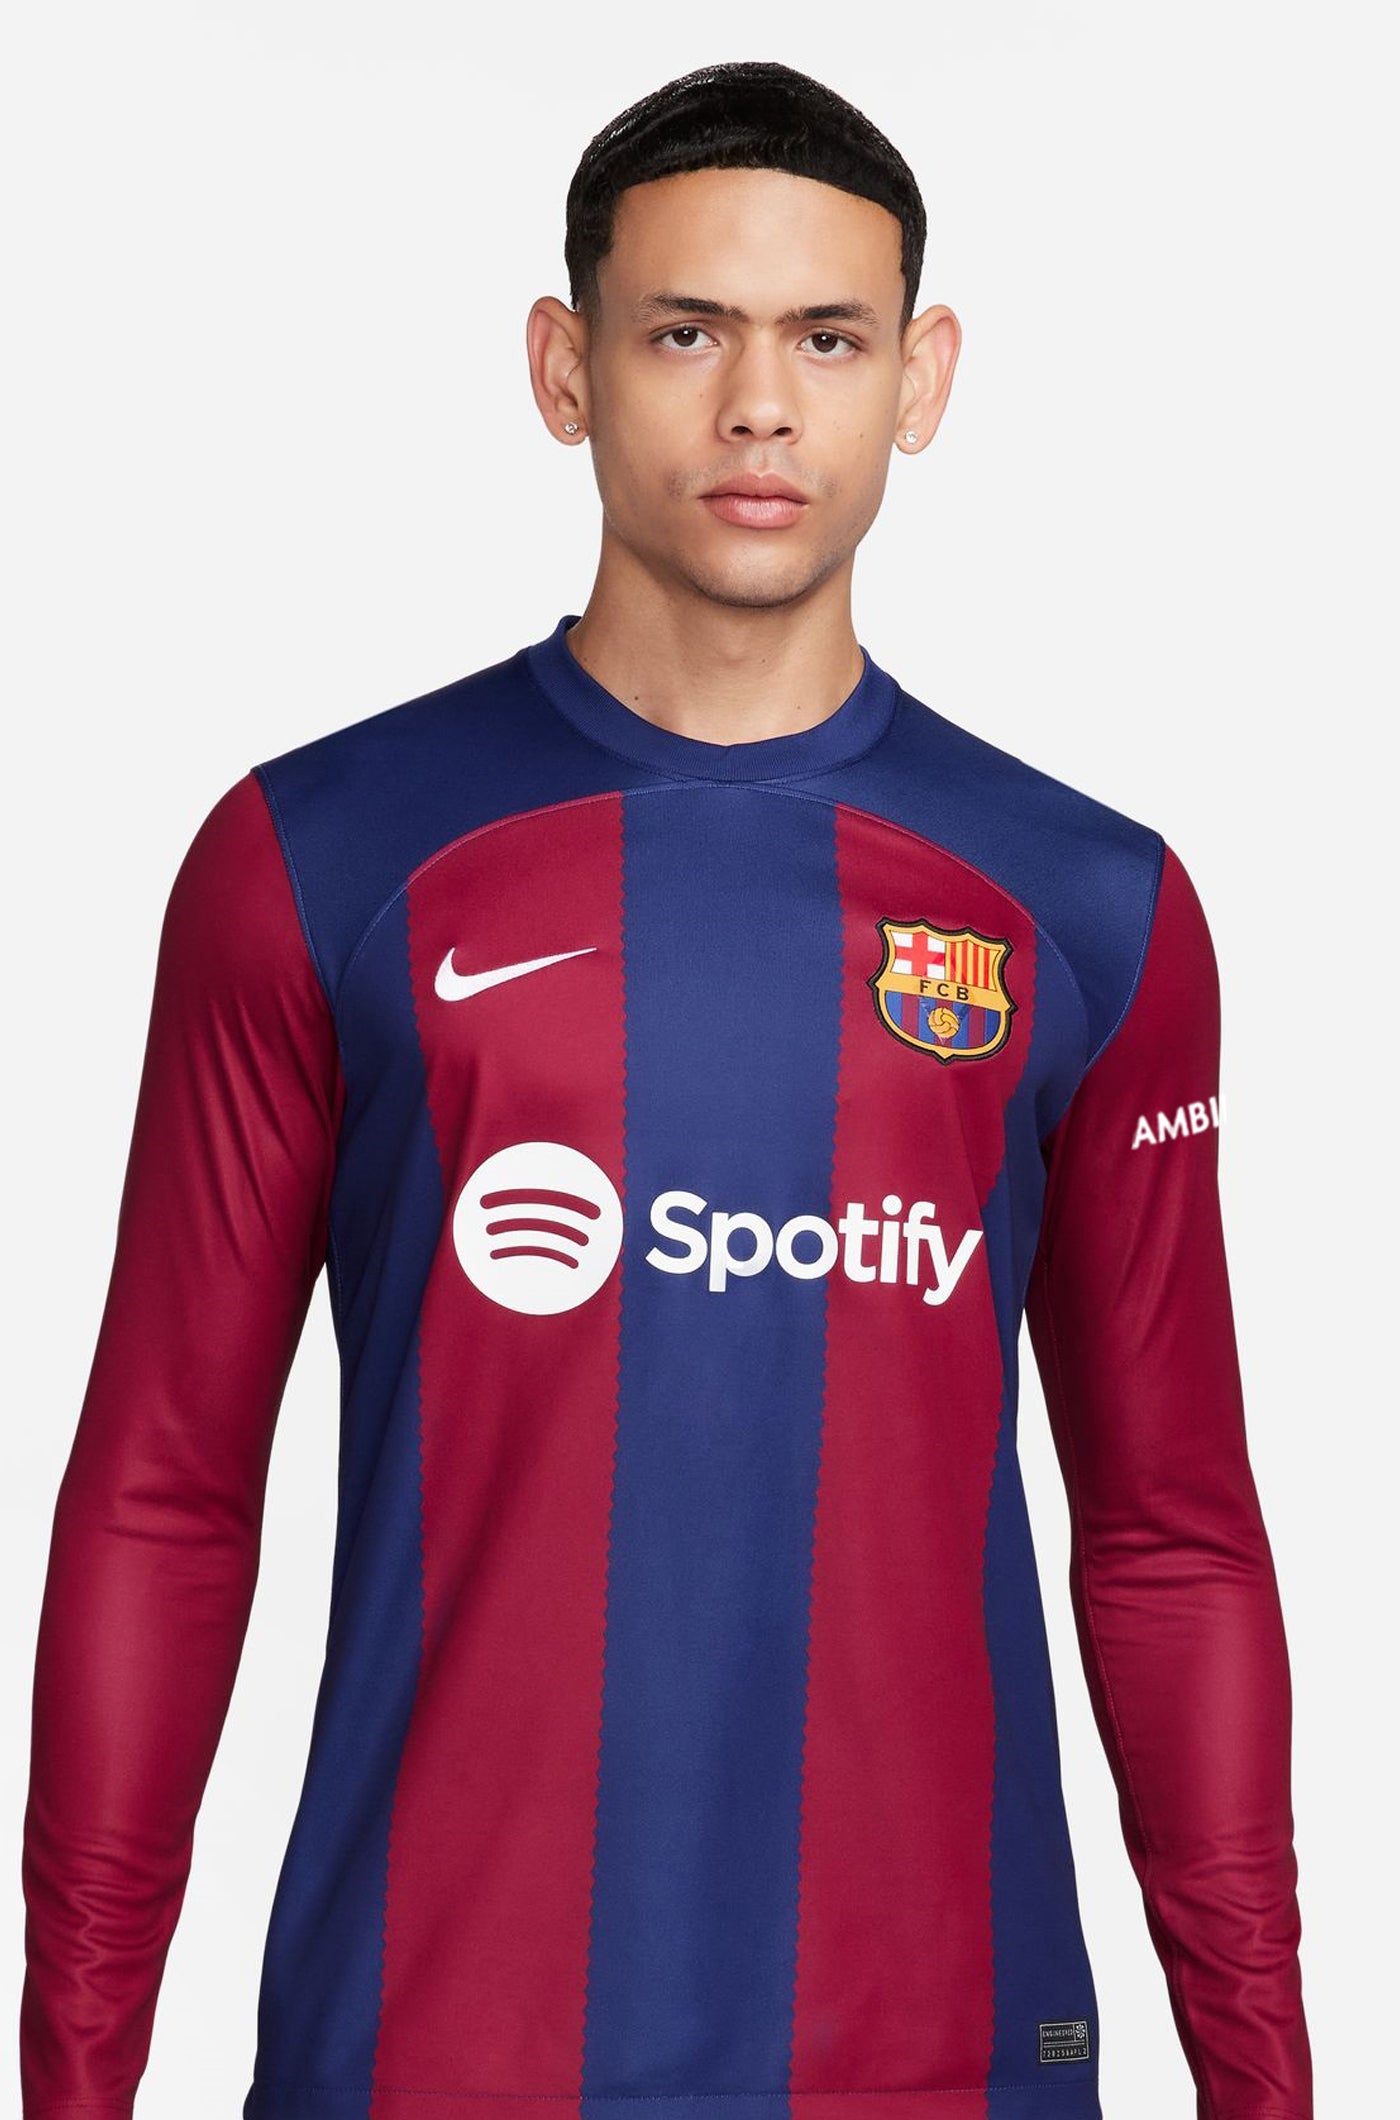 FC Barcelona home shirt 23/24 - Long-sleeve Player's Edition - ROMEU